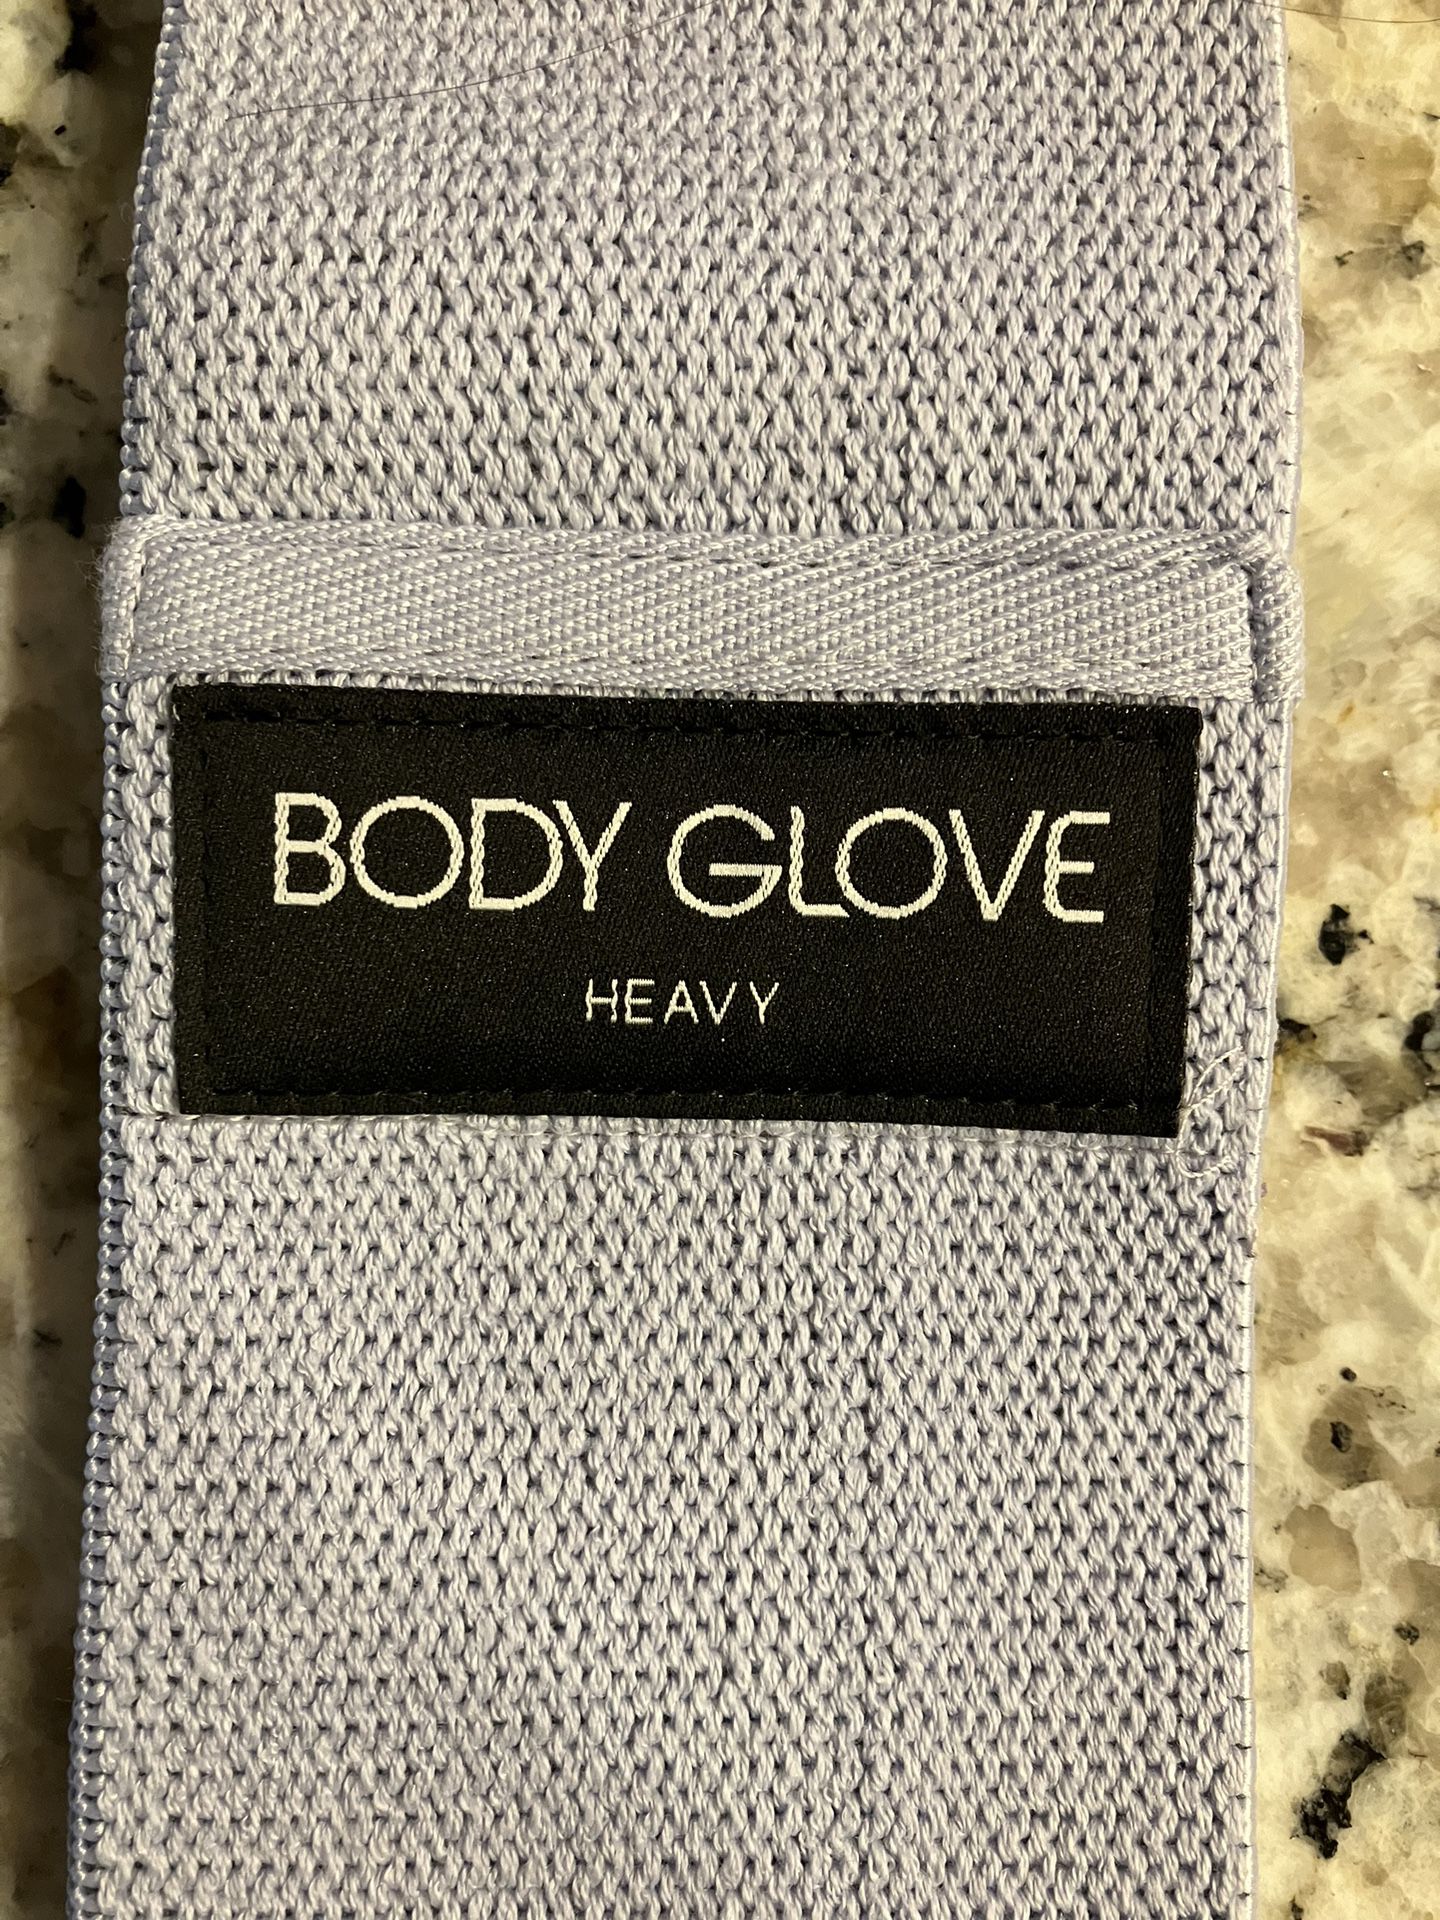 Body glove fabric resistance loop